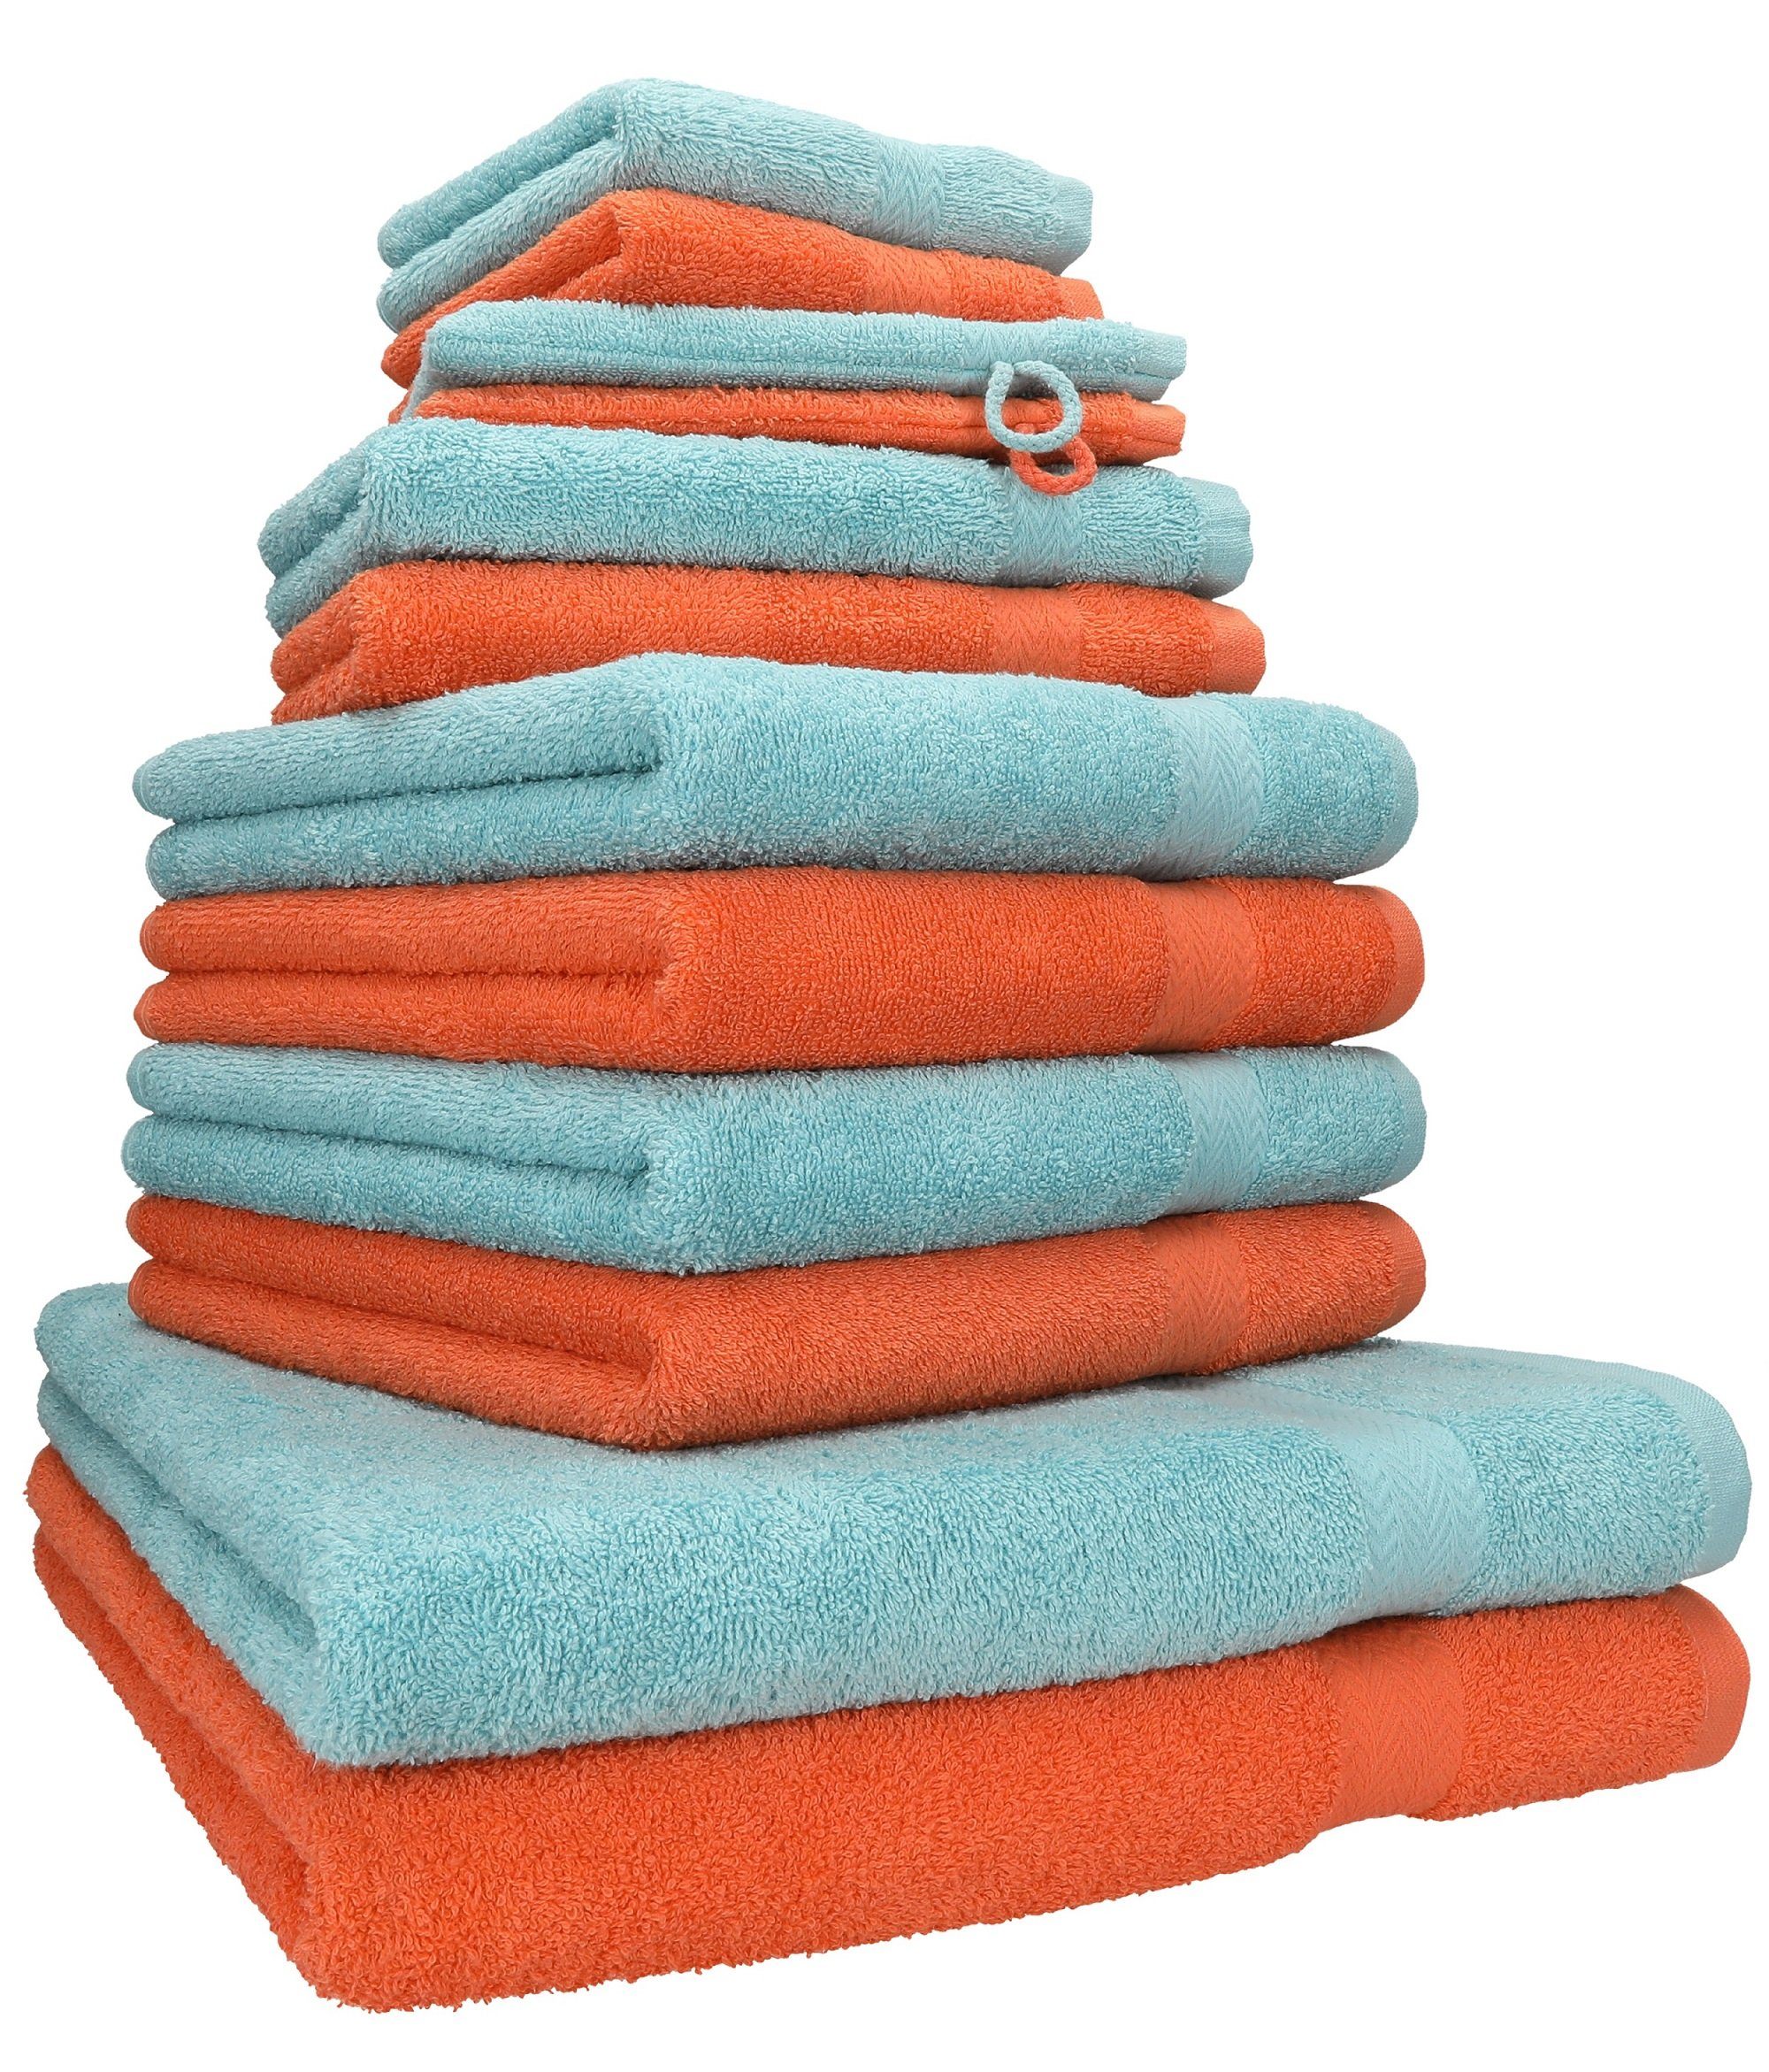 Betz Handtuch Set TLG. Handtuch Set Premium 100% Baumwolle 2 Duschtücher 4 Handtücher 2 Gästetücher 2 Seiftücher 2 Waschhandschuhe Farbe blutorange/Ocean Marke: Betz, 100% Baumwolle, (12-tlg)